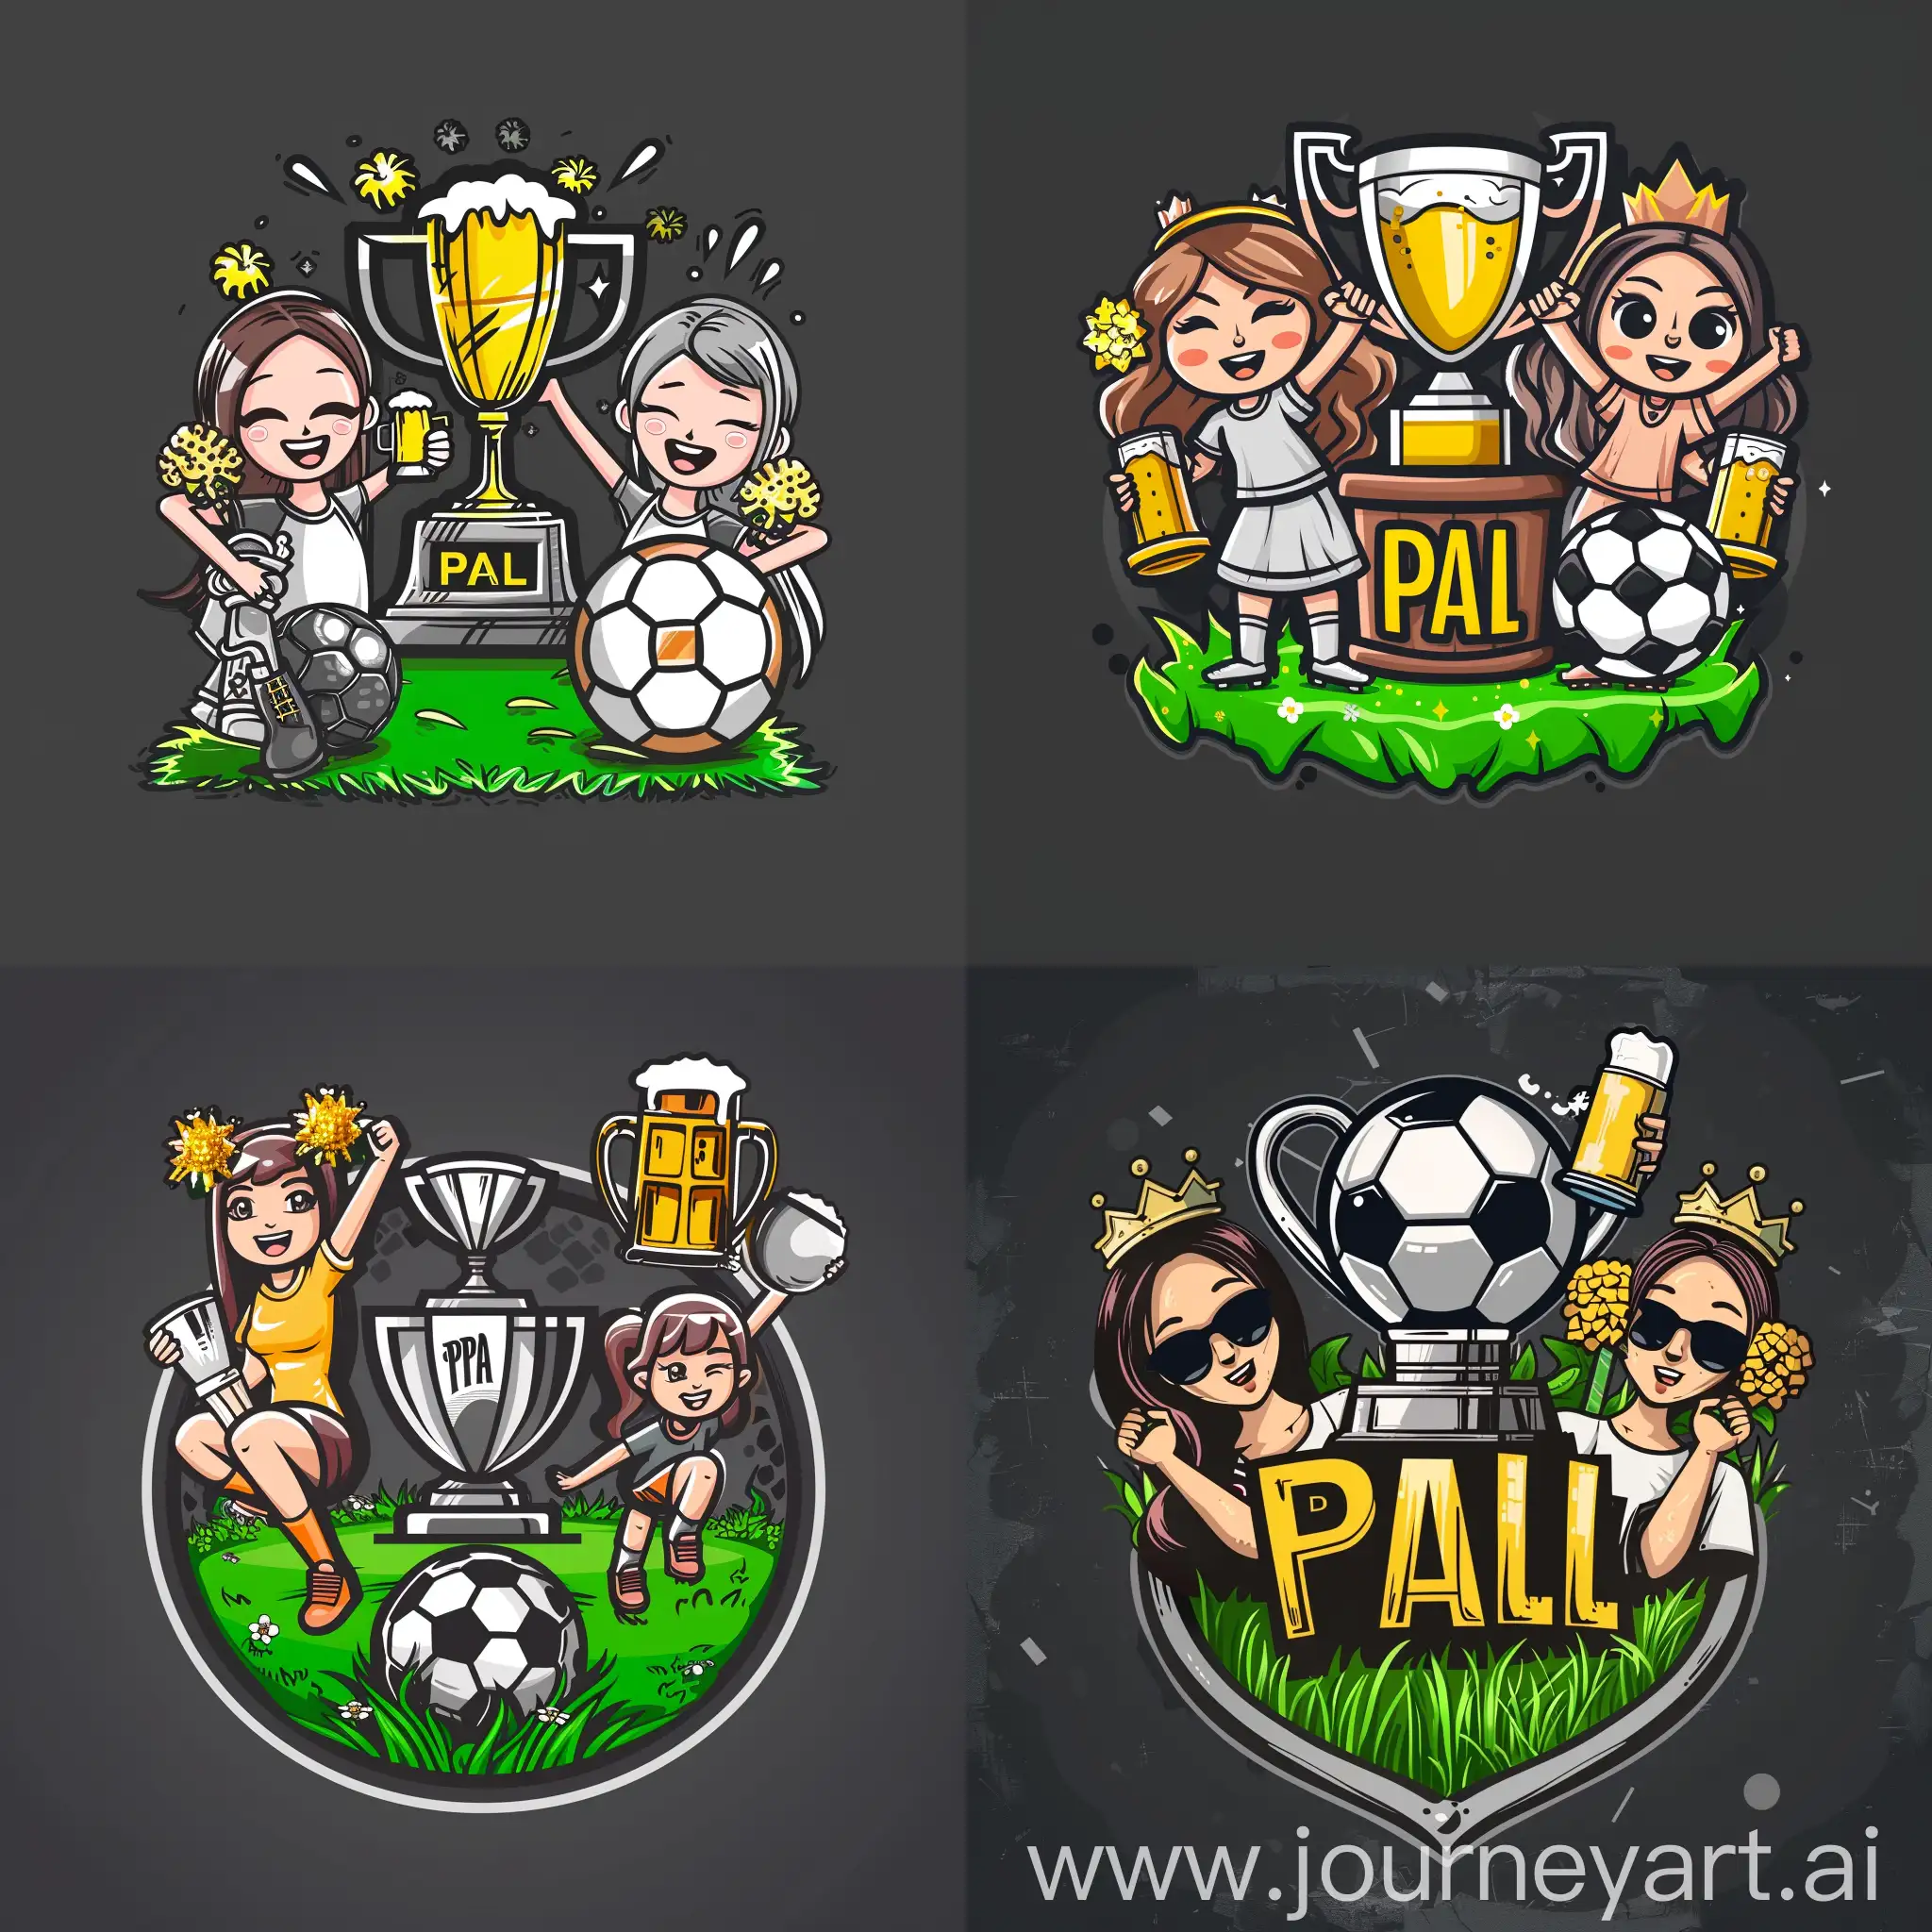 PAL-Soccer-Club-Logo-Trophy-Ball-Beer-Cheerleaders-on-Green-Grass